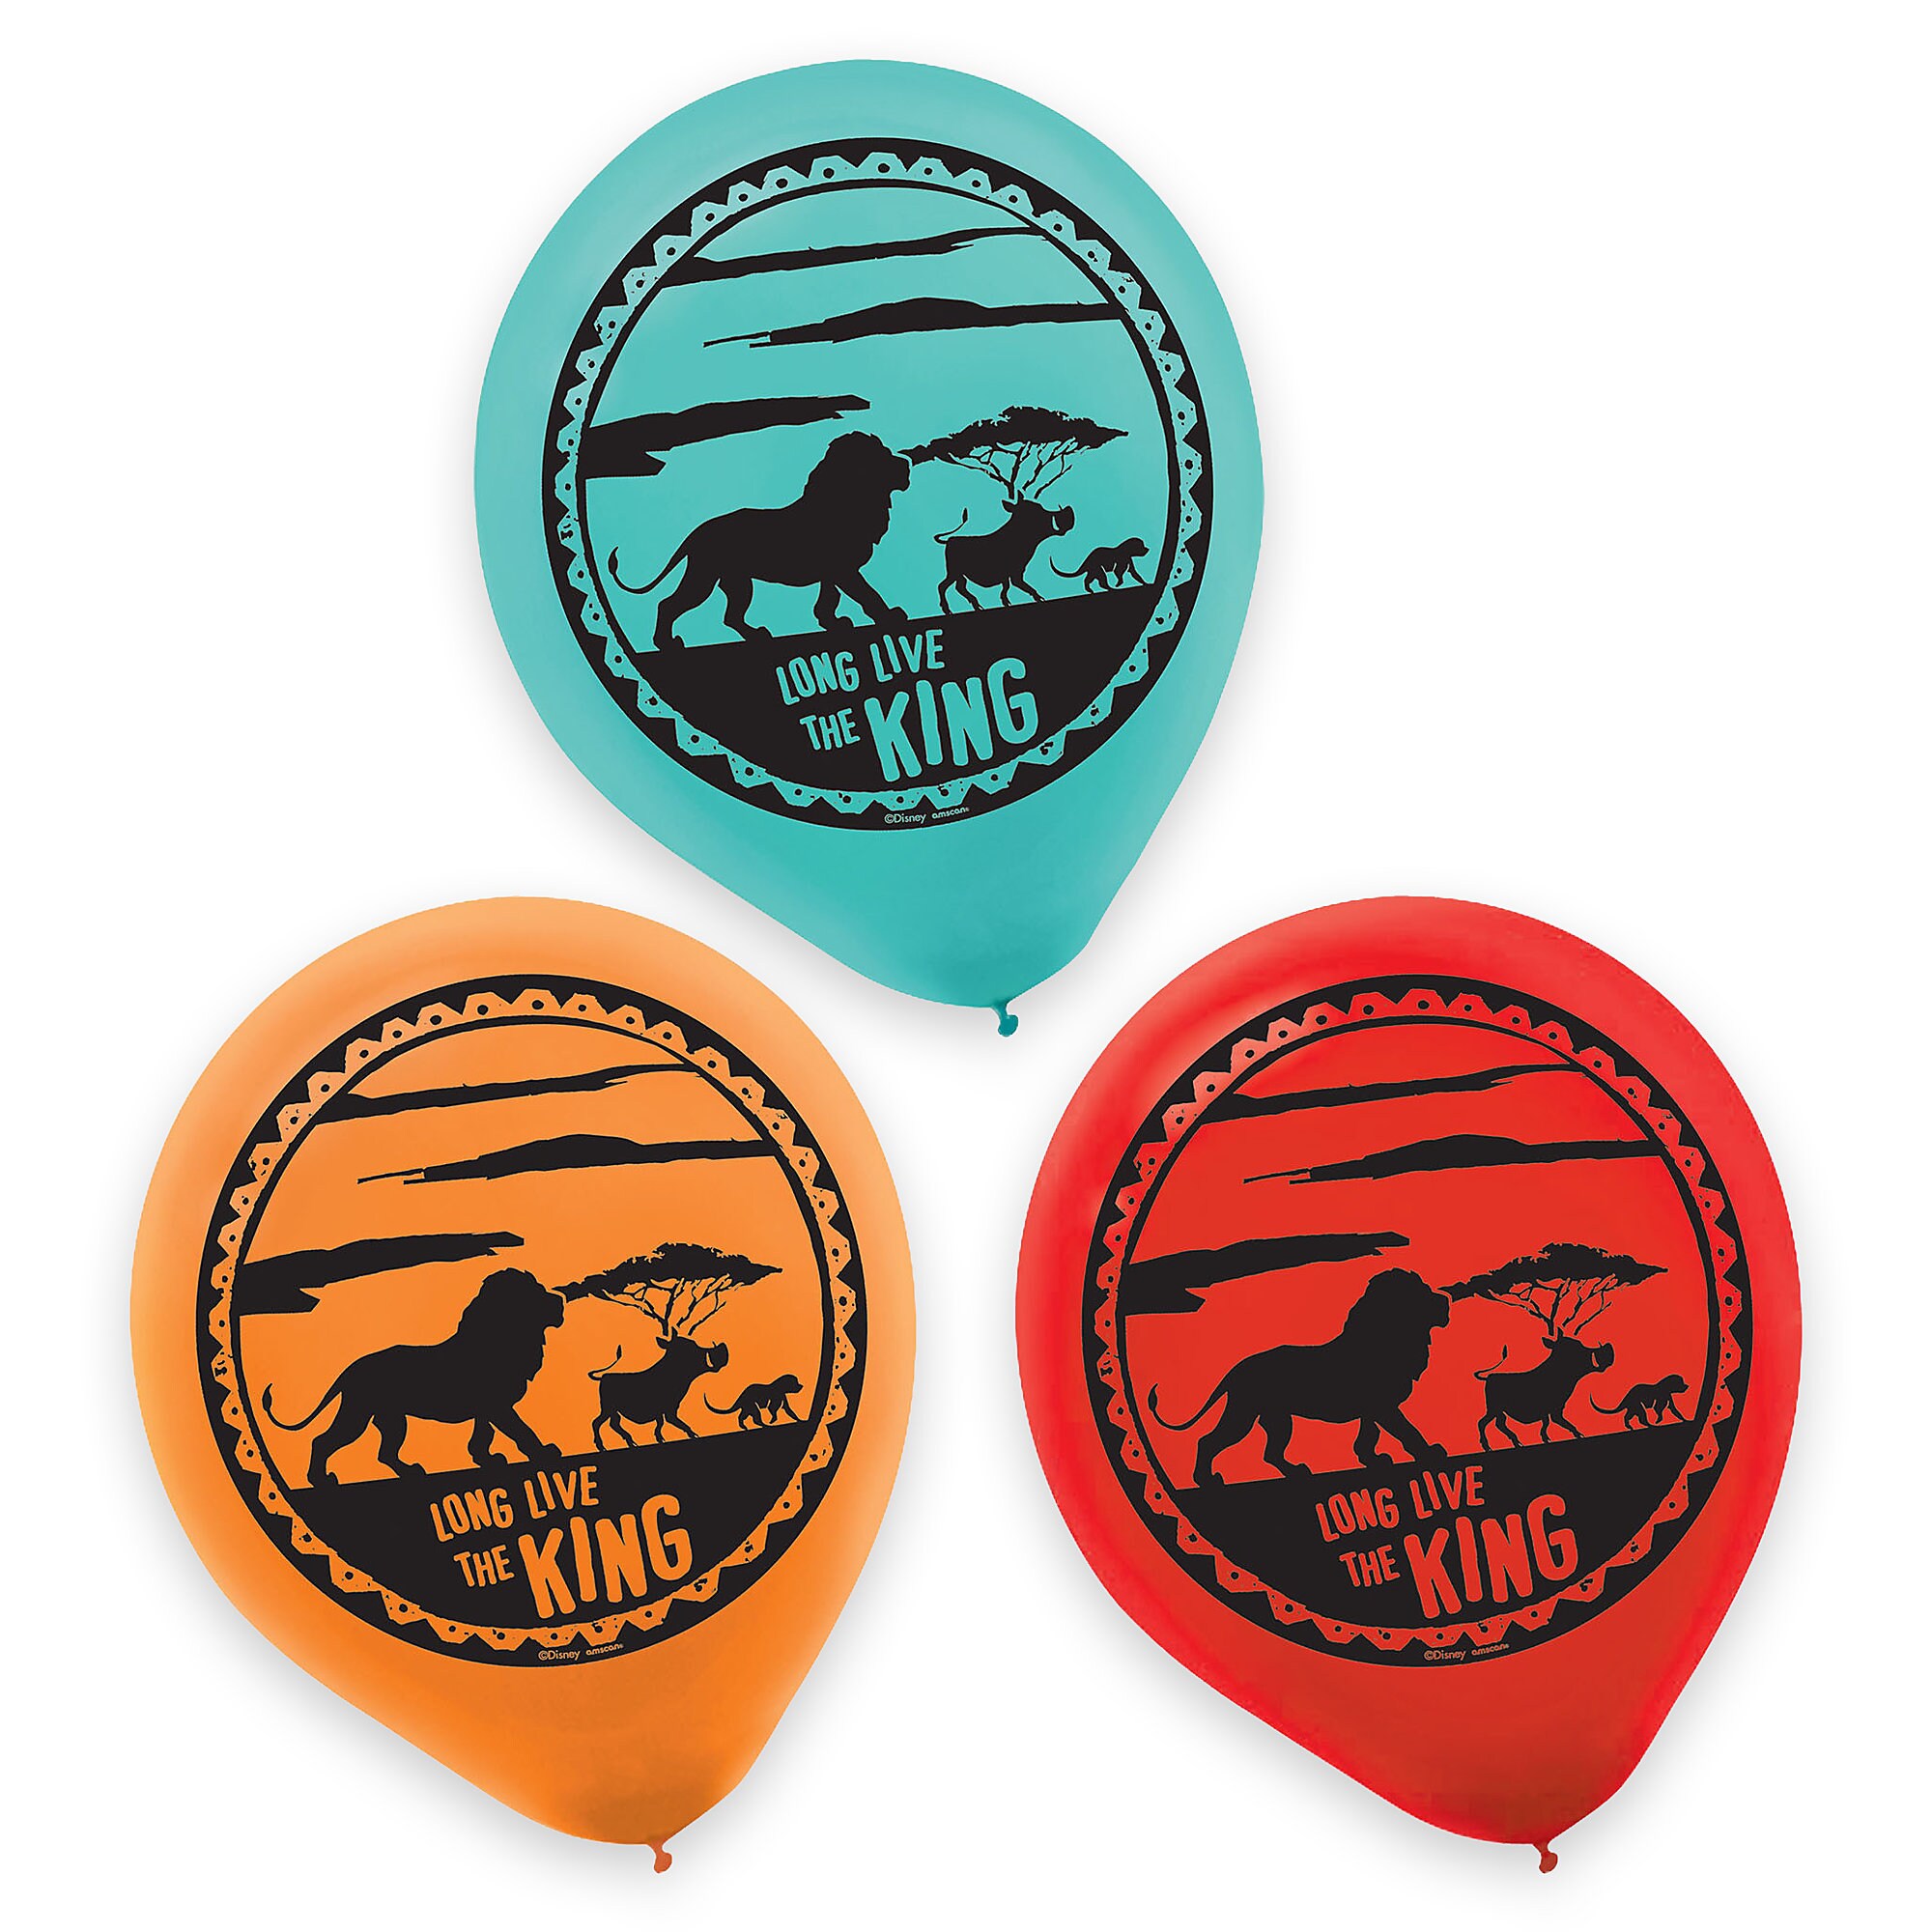 The Lion King 2019 Film Balloons